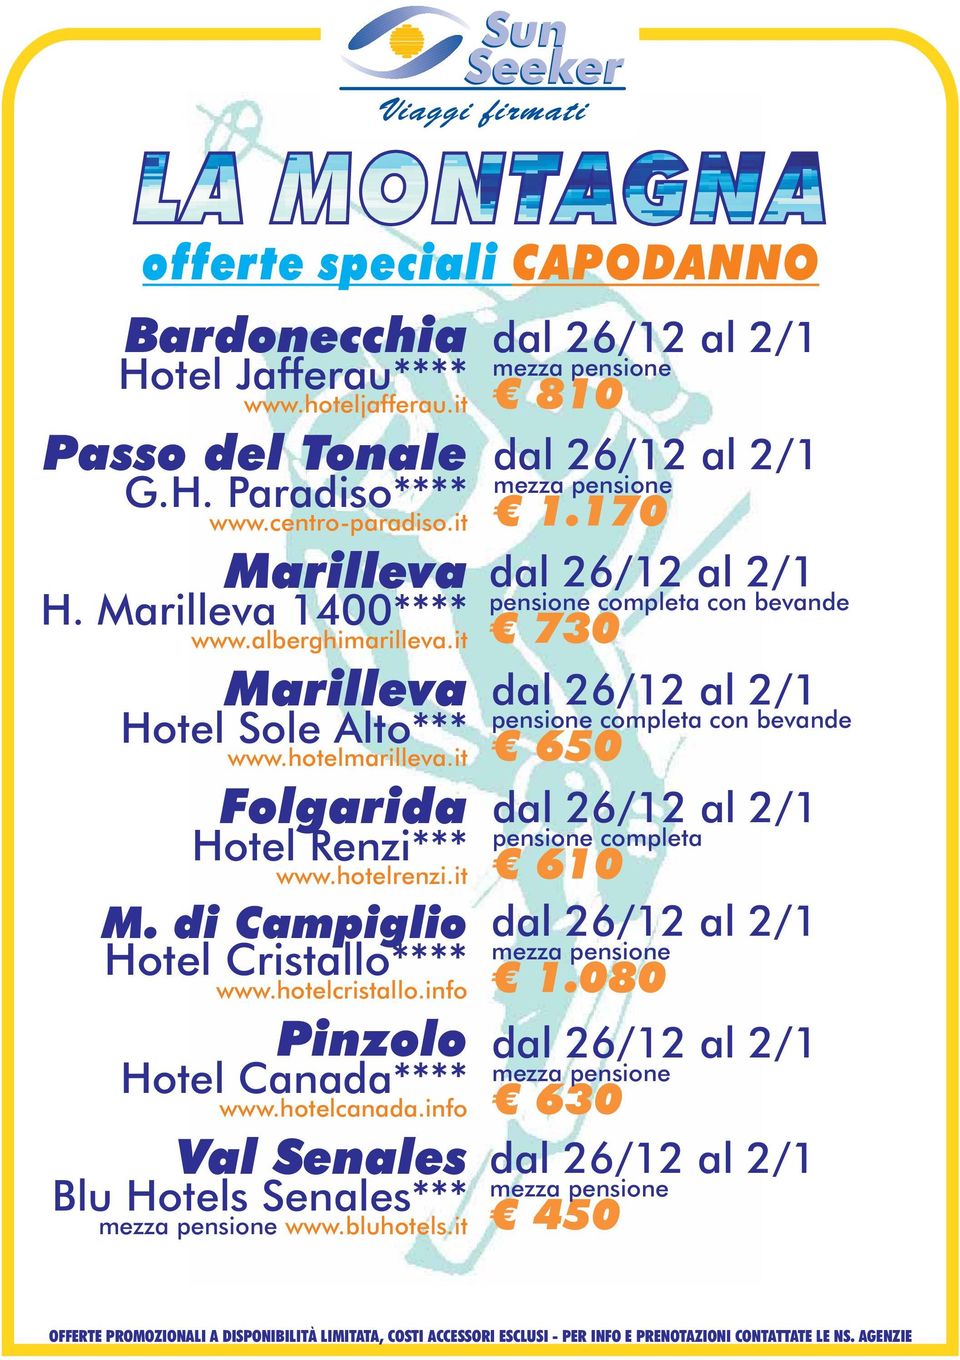 info Val Senales Blu Hotels Senales*** www.bluhotels.it dal 26/12 al 2/1 810 dal 26/12 al 2/1 1.